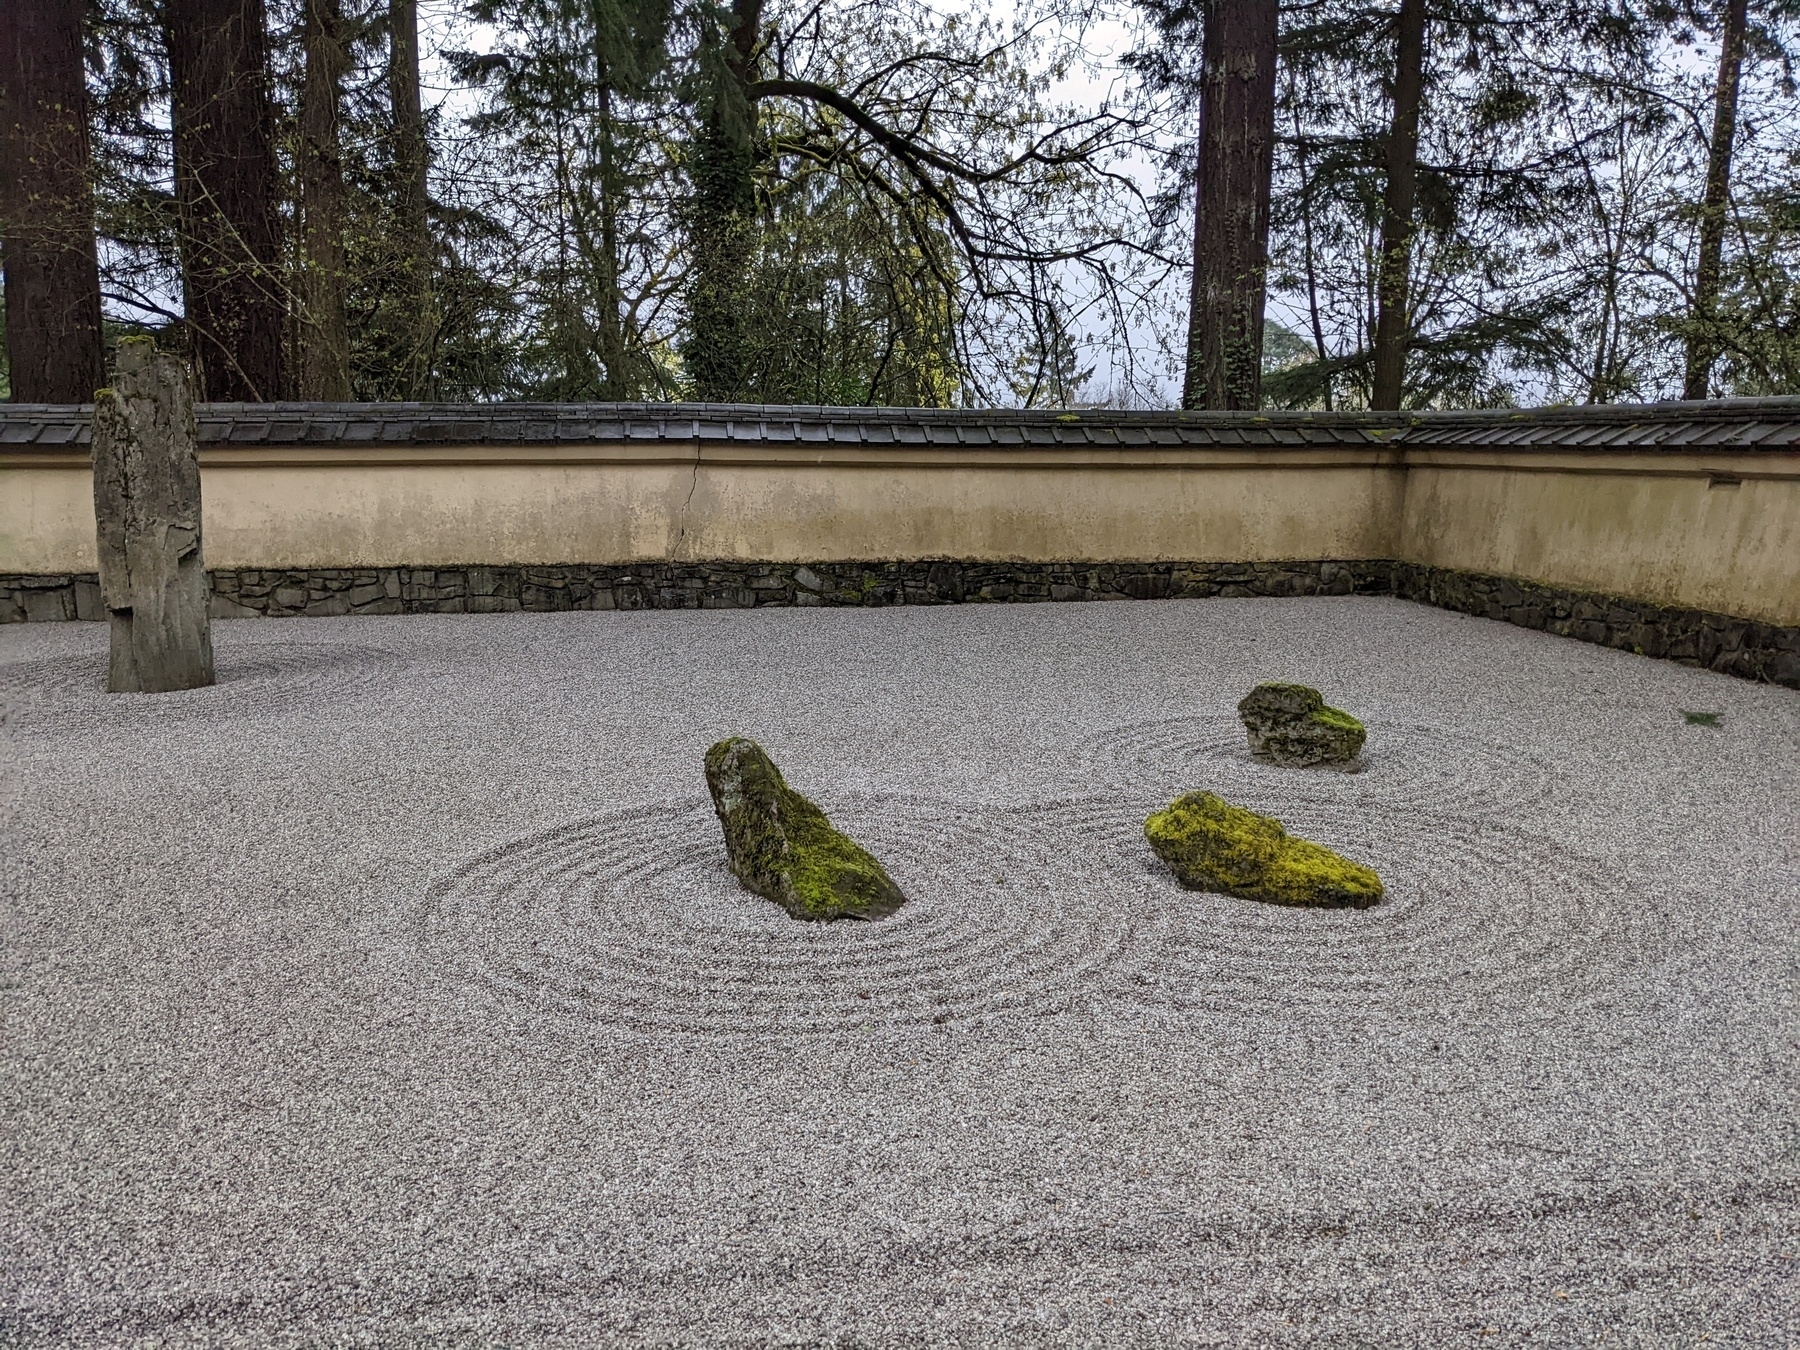 Zen garden, with moss-covered rocks in a landscape of carefully raked gravel